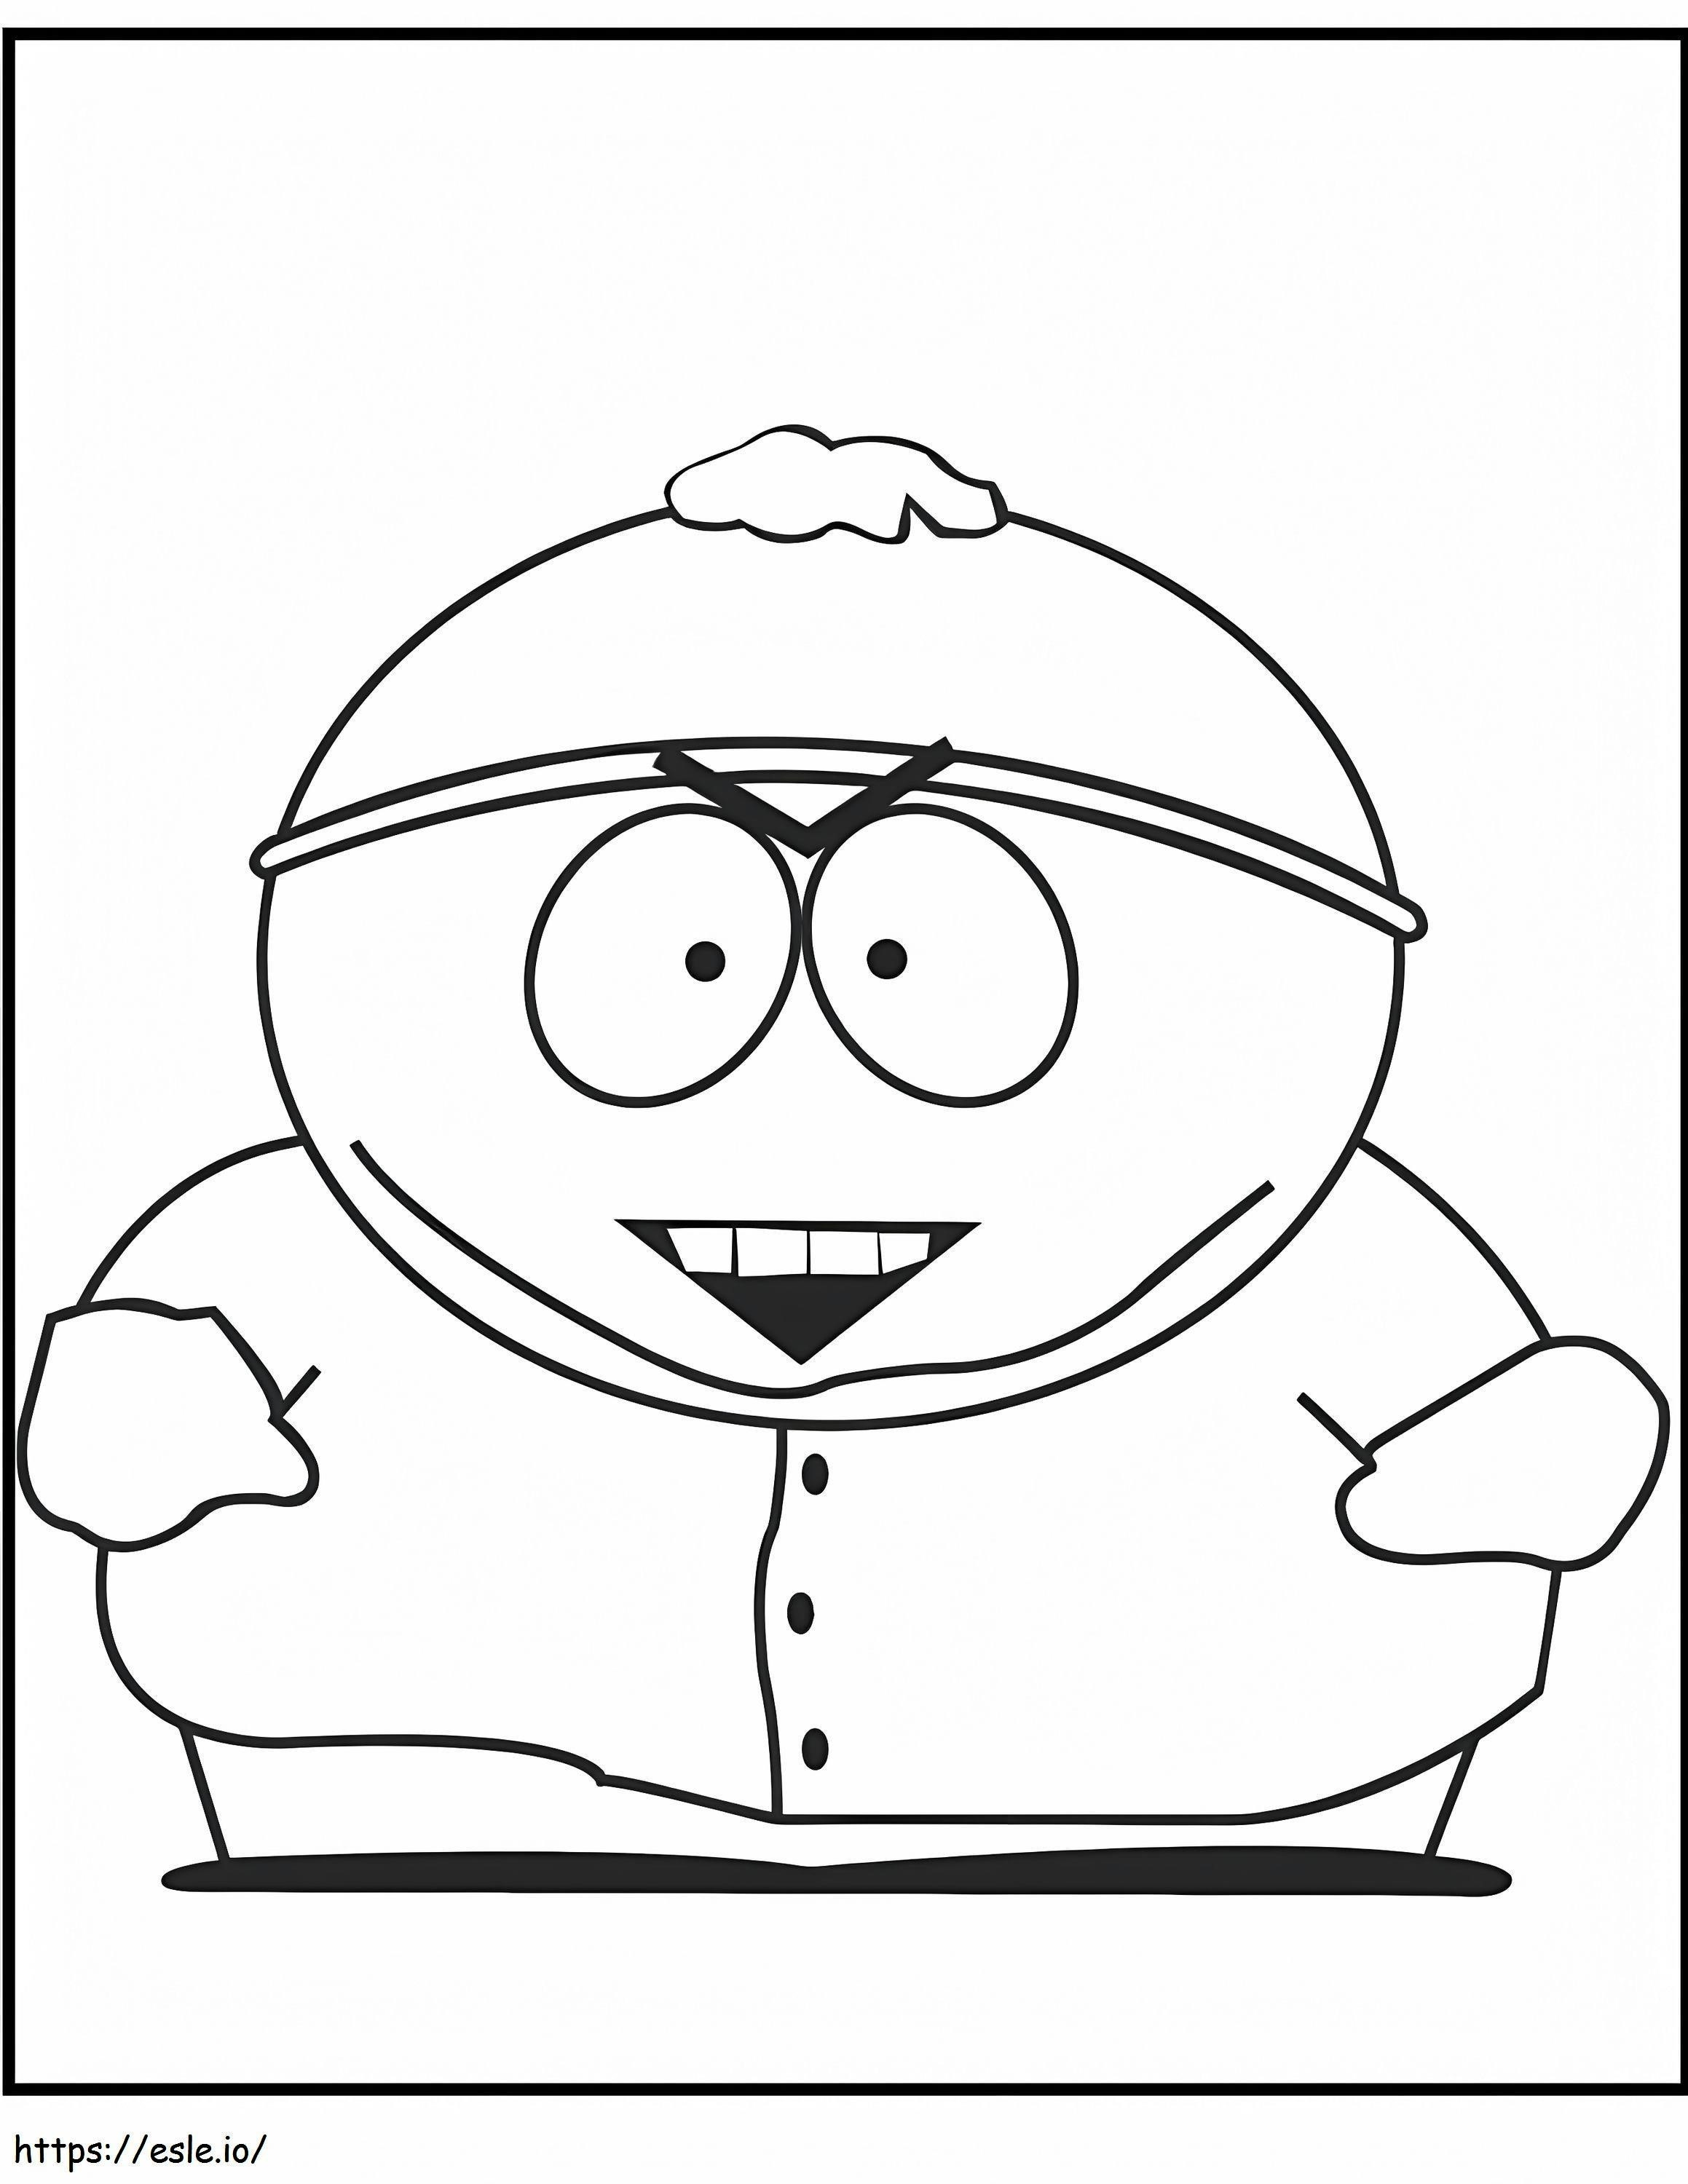 Eric Cartman coloring page